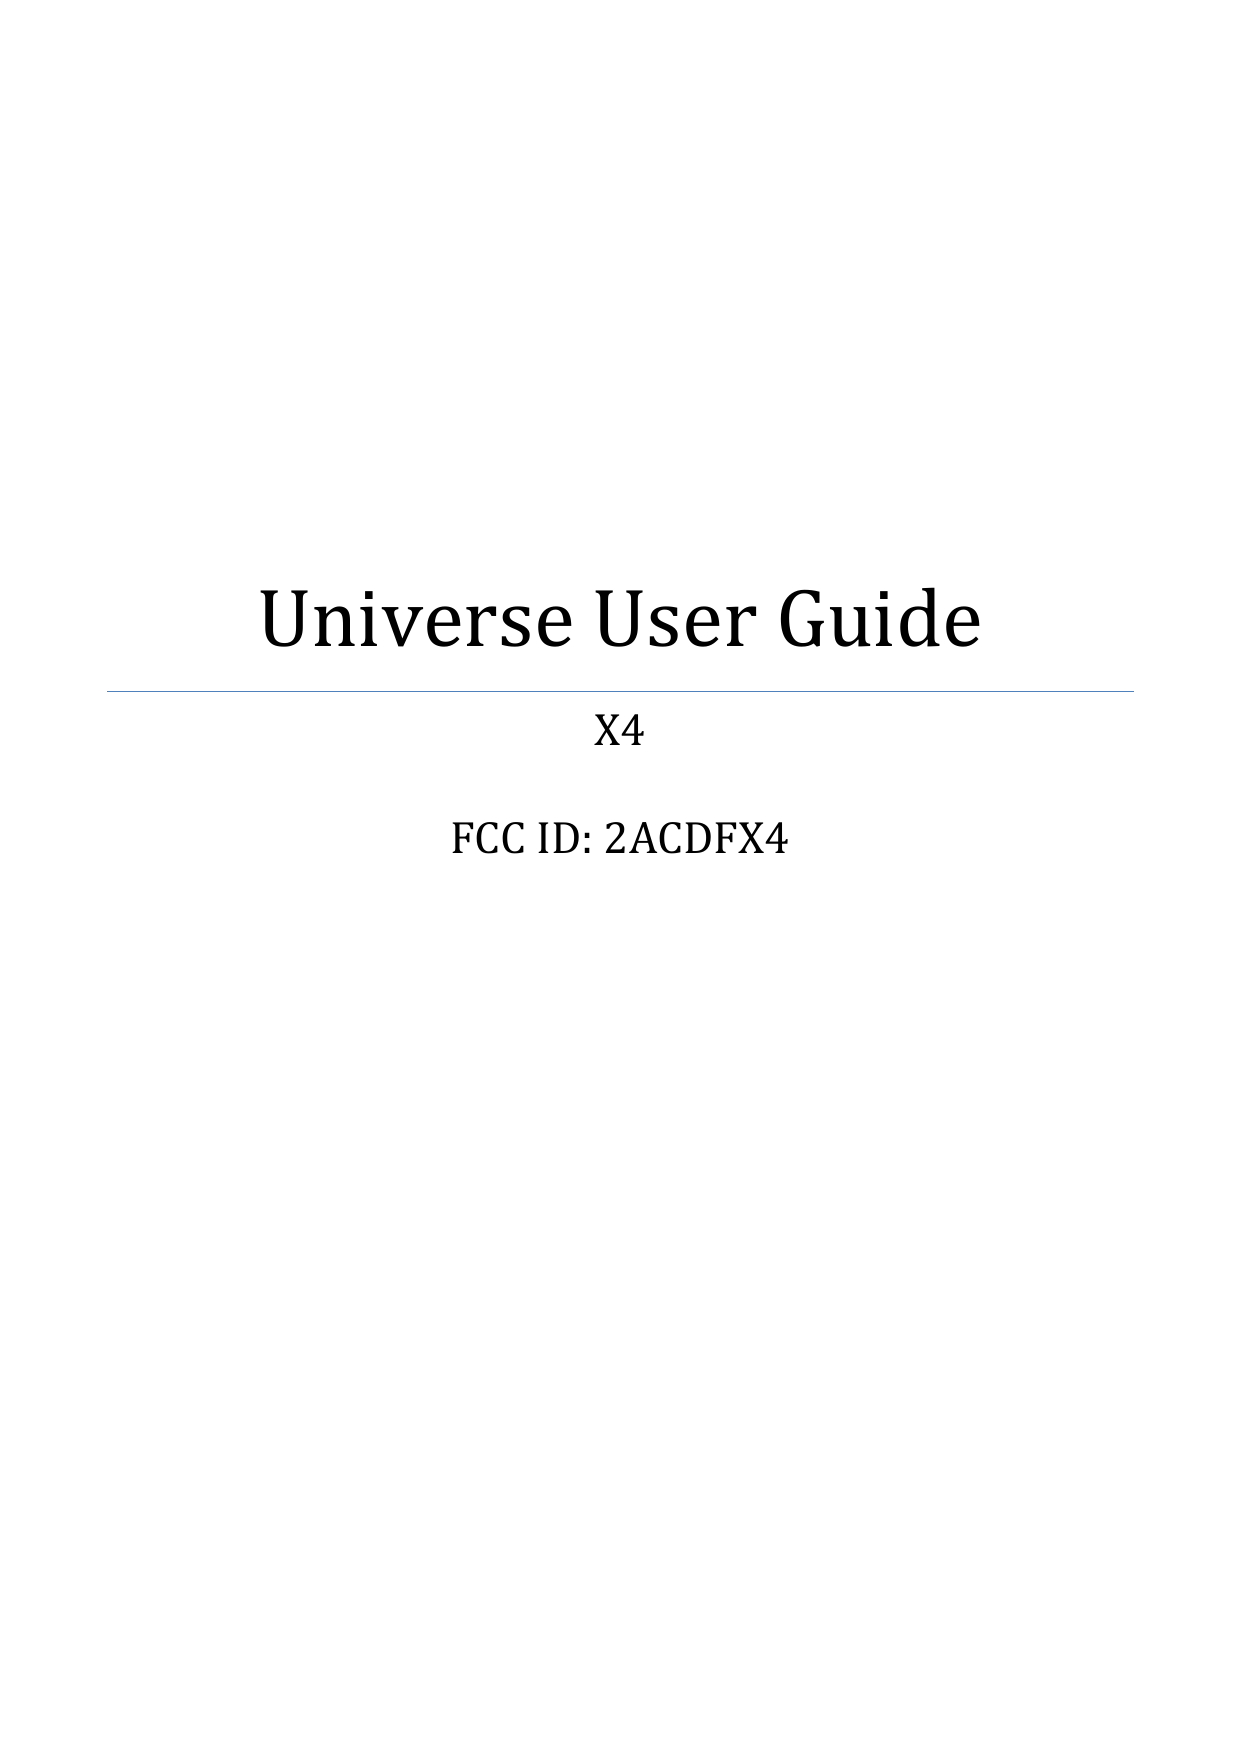                Universe User Guide X4  FCC ID: 2ACDFX4            